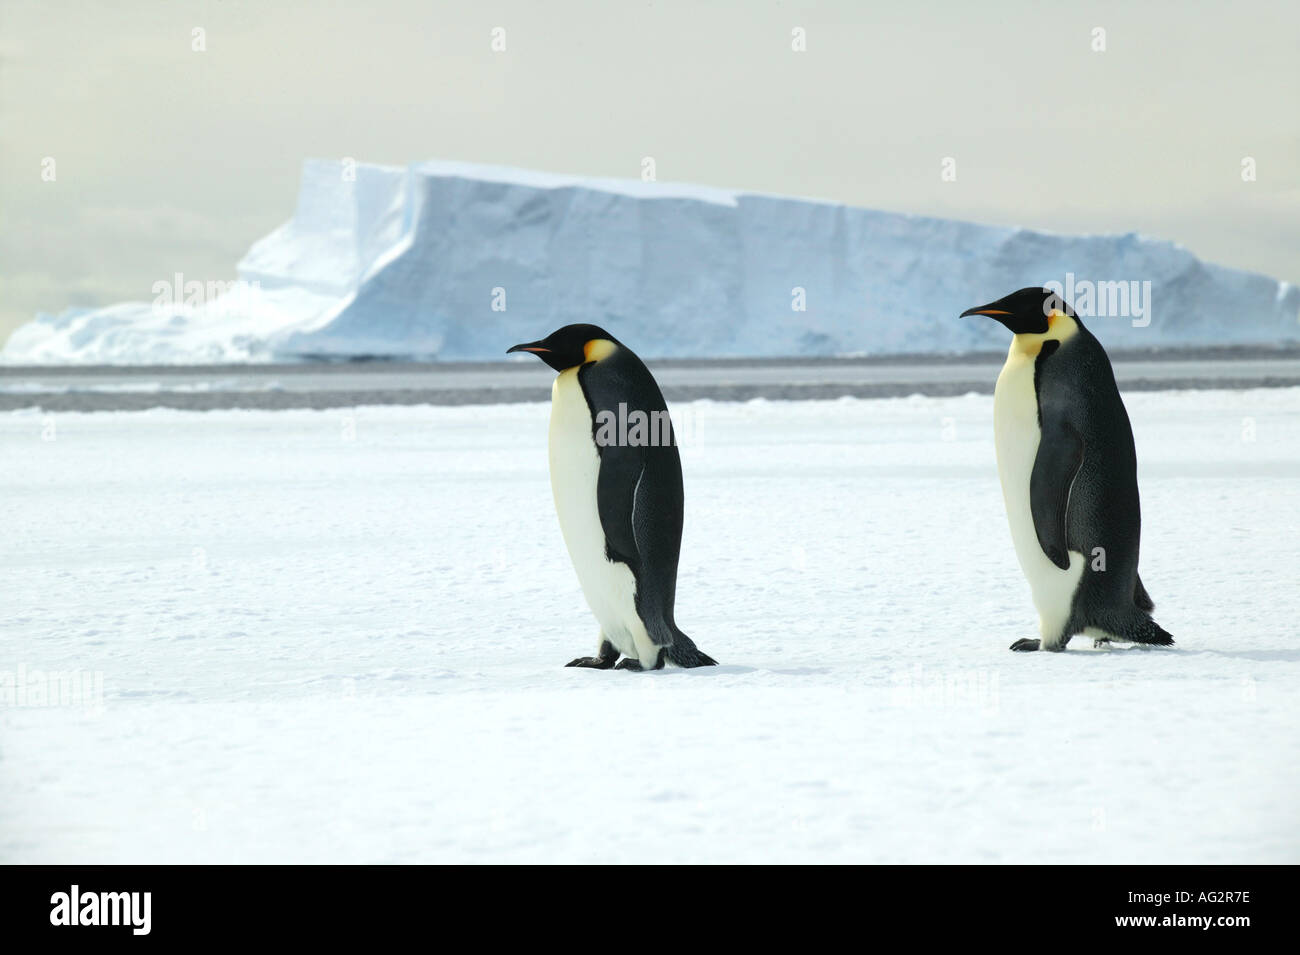 Deux manchots empereurs de décor Baie Atka mer de Weddell, Antarctique Banque D'Images